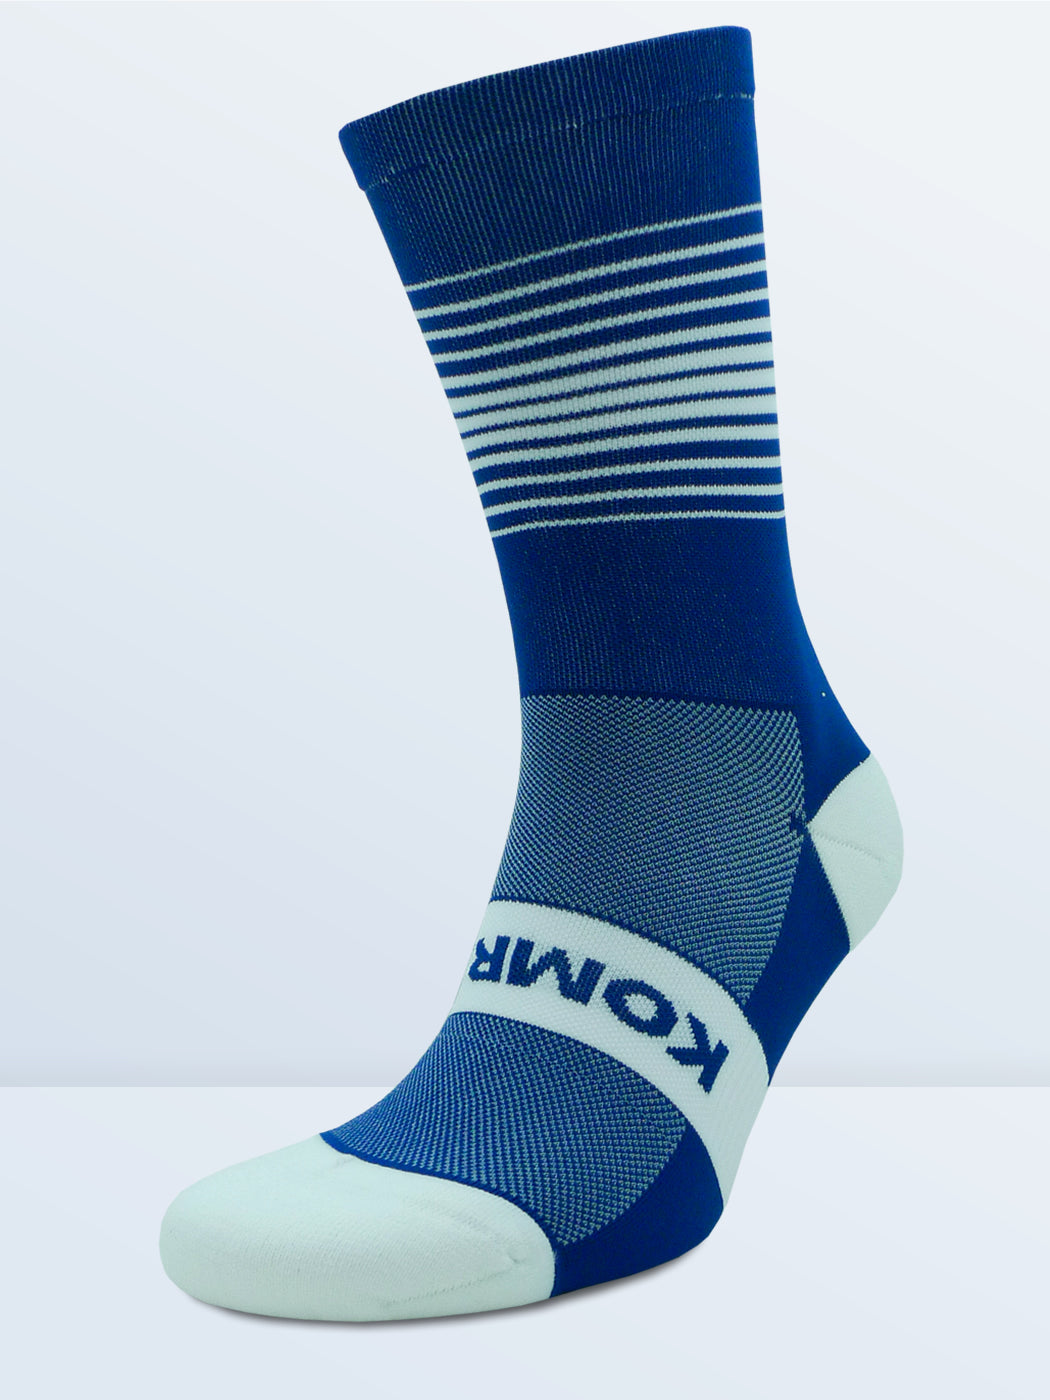 Swagger Socks - Navy Blue